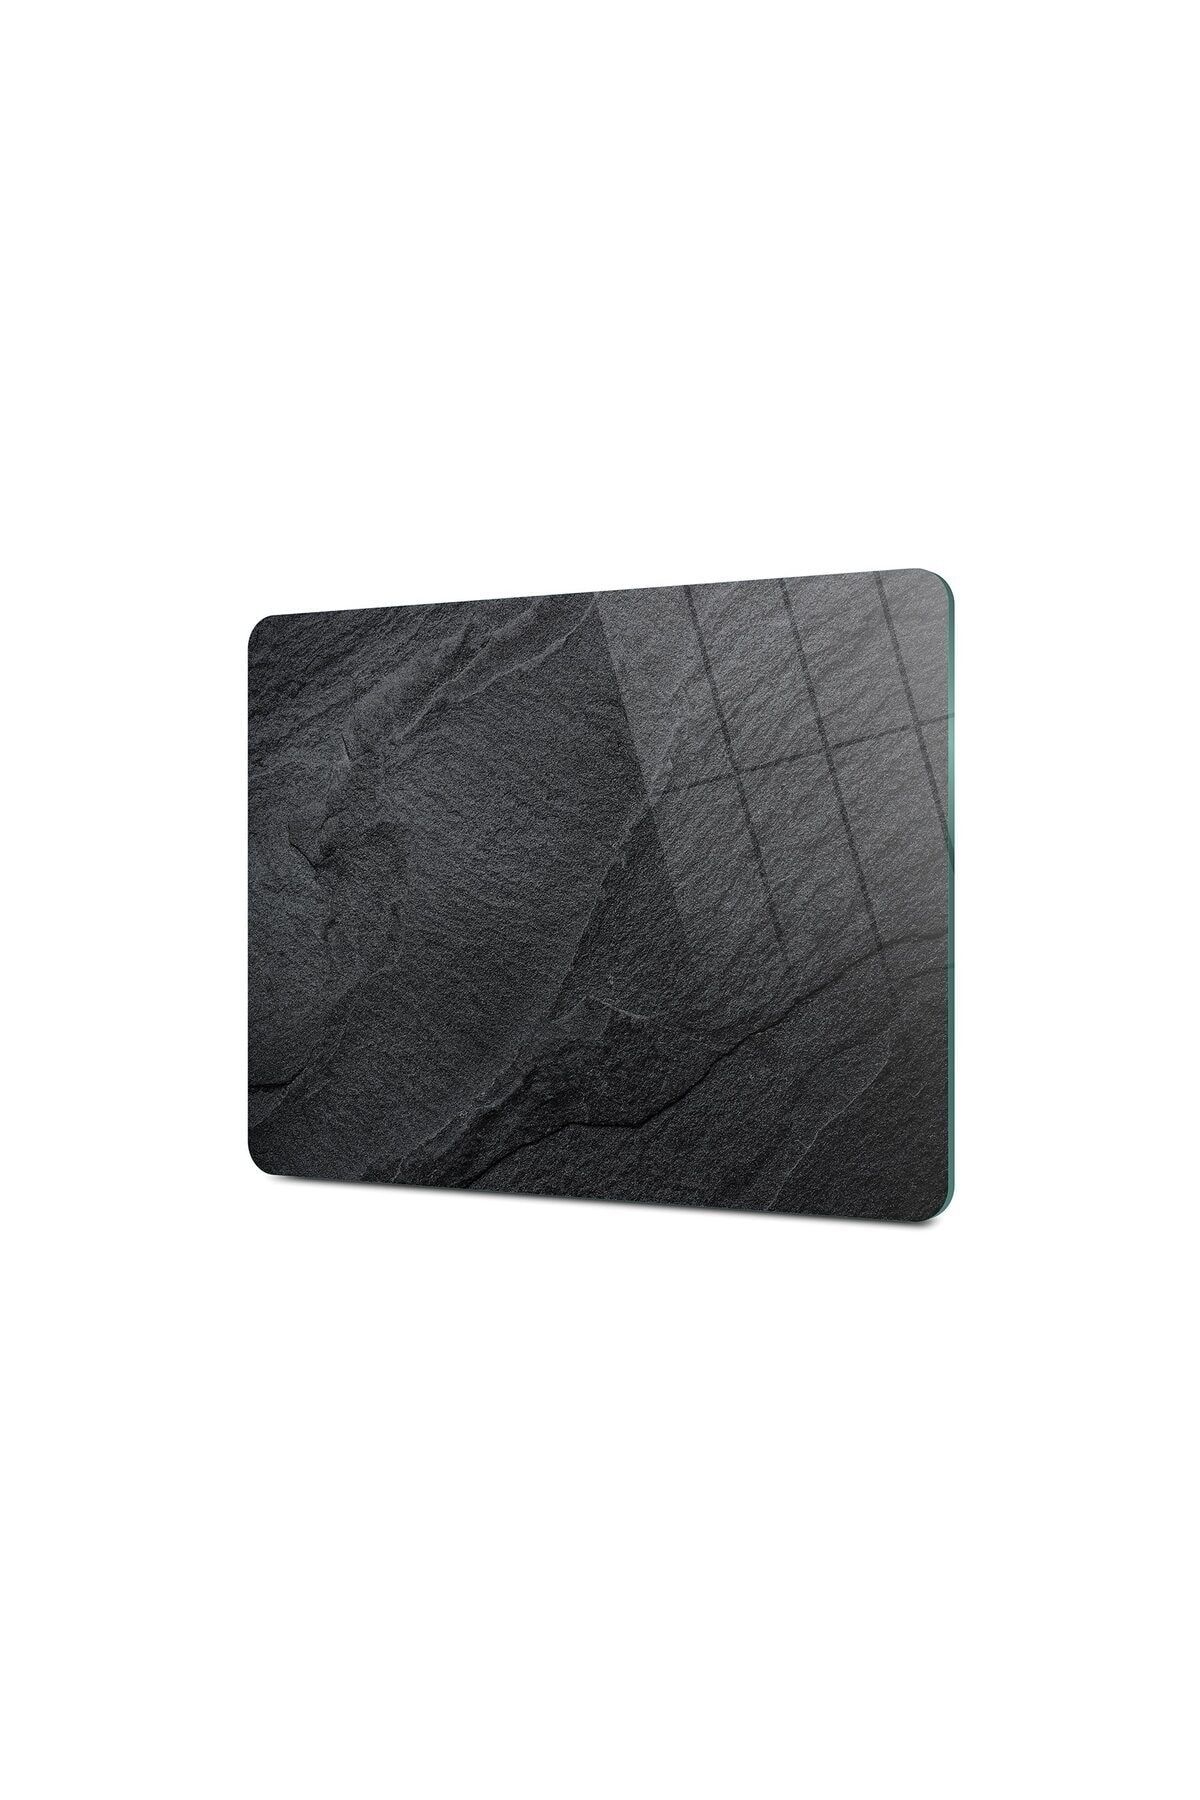 Decovetro Cam Kesme Tahtası - Kesim Tablası | Siyah Taş Görünümlü | 30cm X 40cm